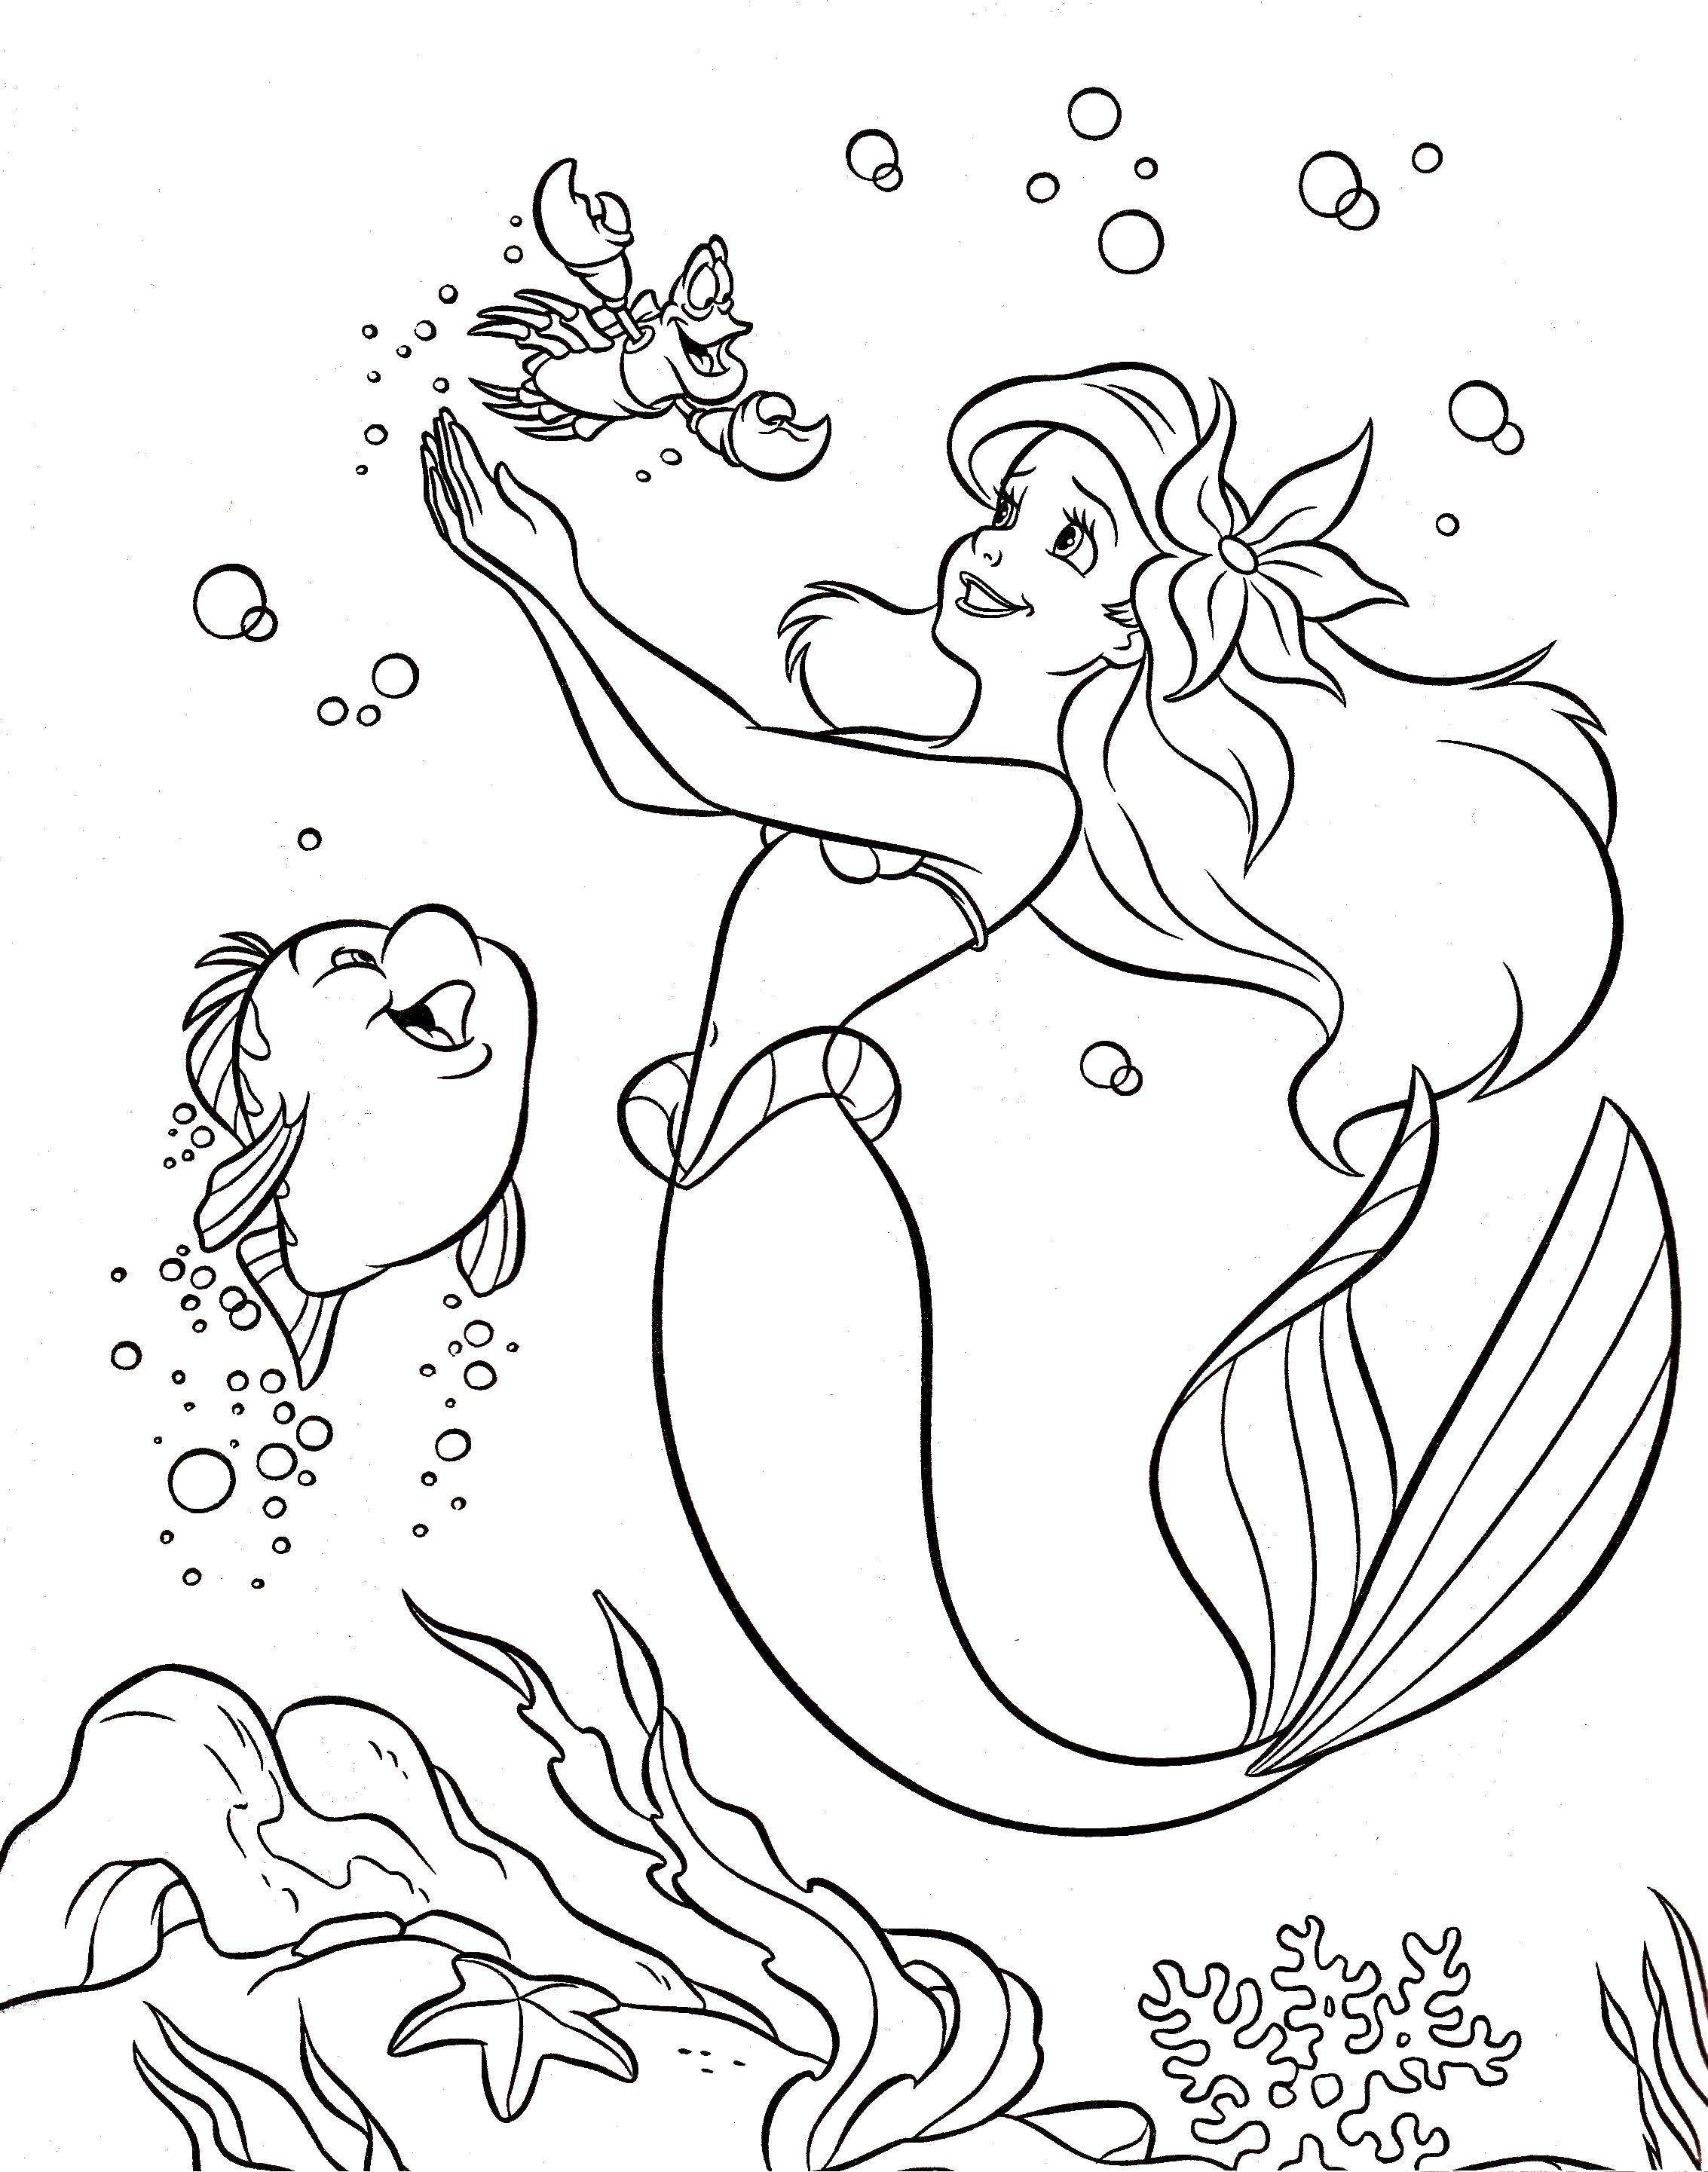 Coloring Joy Ariel. Category The little mermaid. Tags:  Disney, the little mermaid, Ariel.